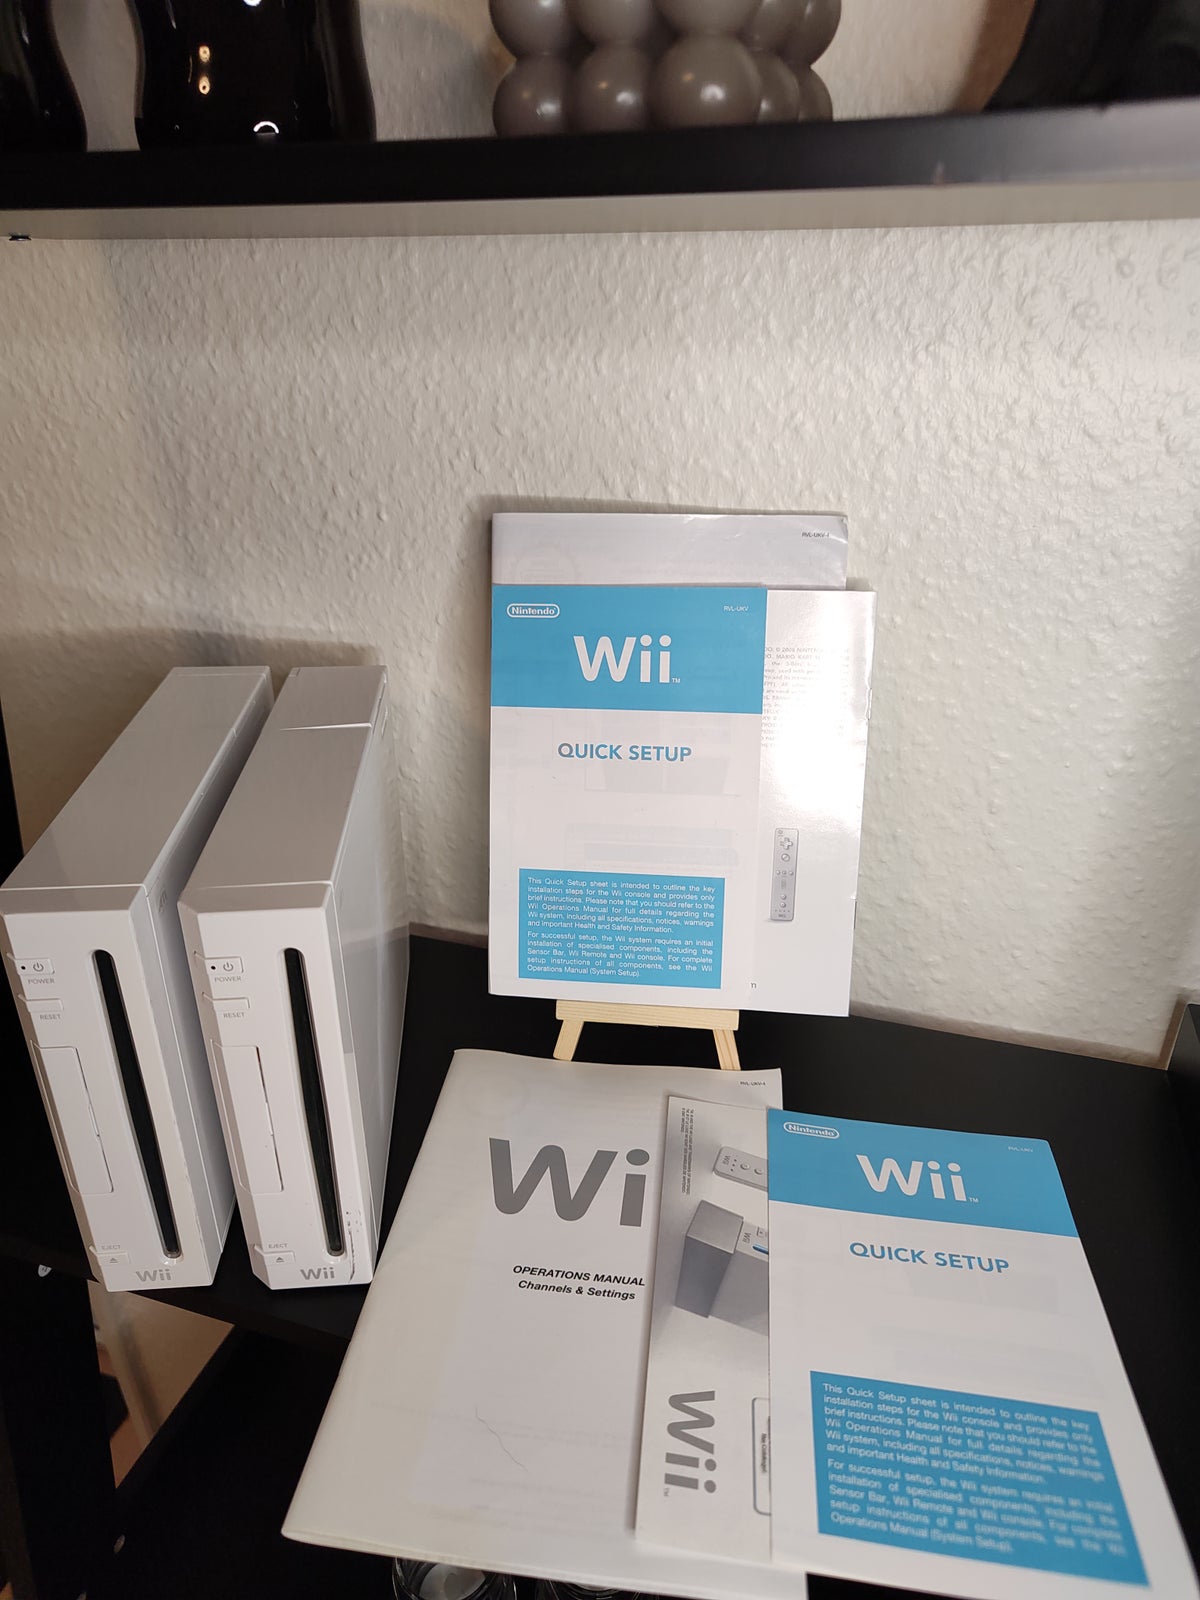 Nintendo Wii, God